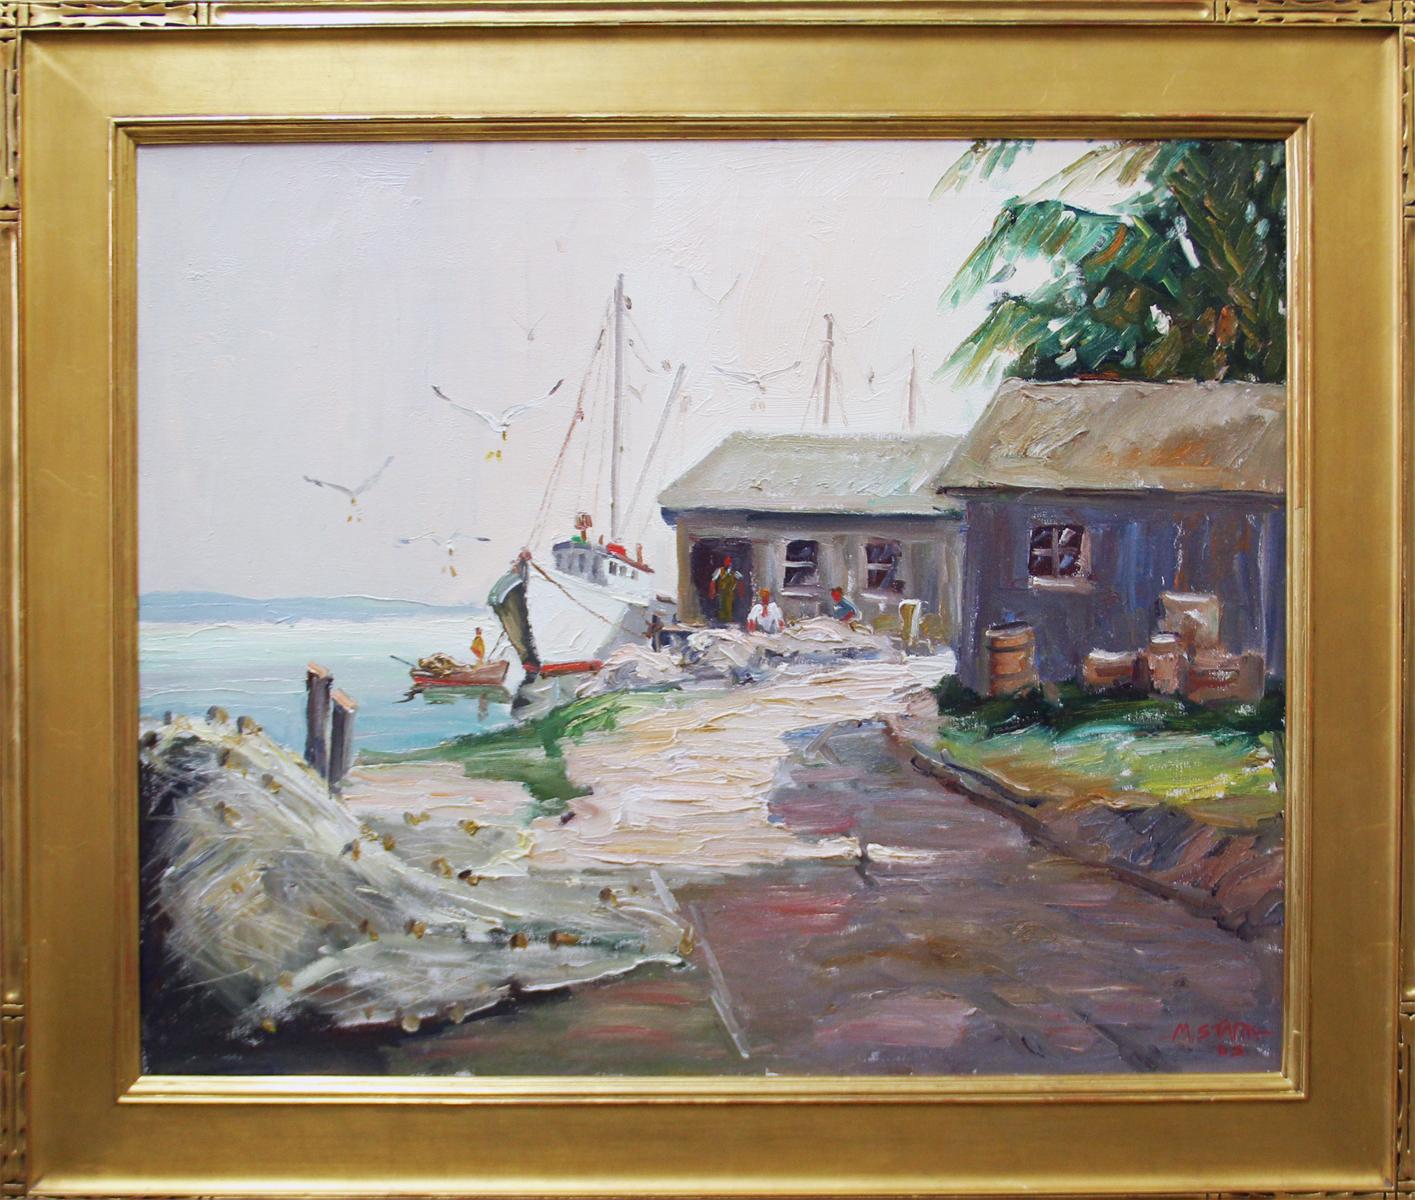 Melville Stark Figurative Painting - Bells Fish House, Long Boat Key, FL, Impressionist Marine Scene with Figures